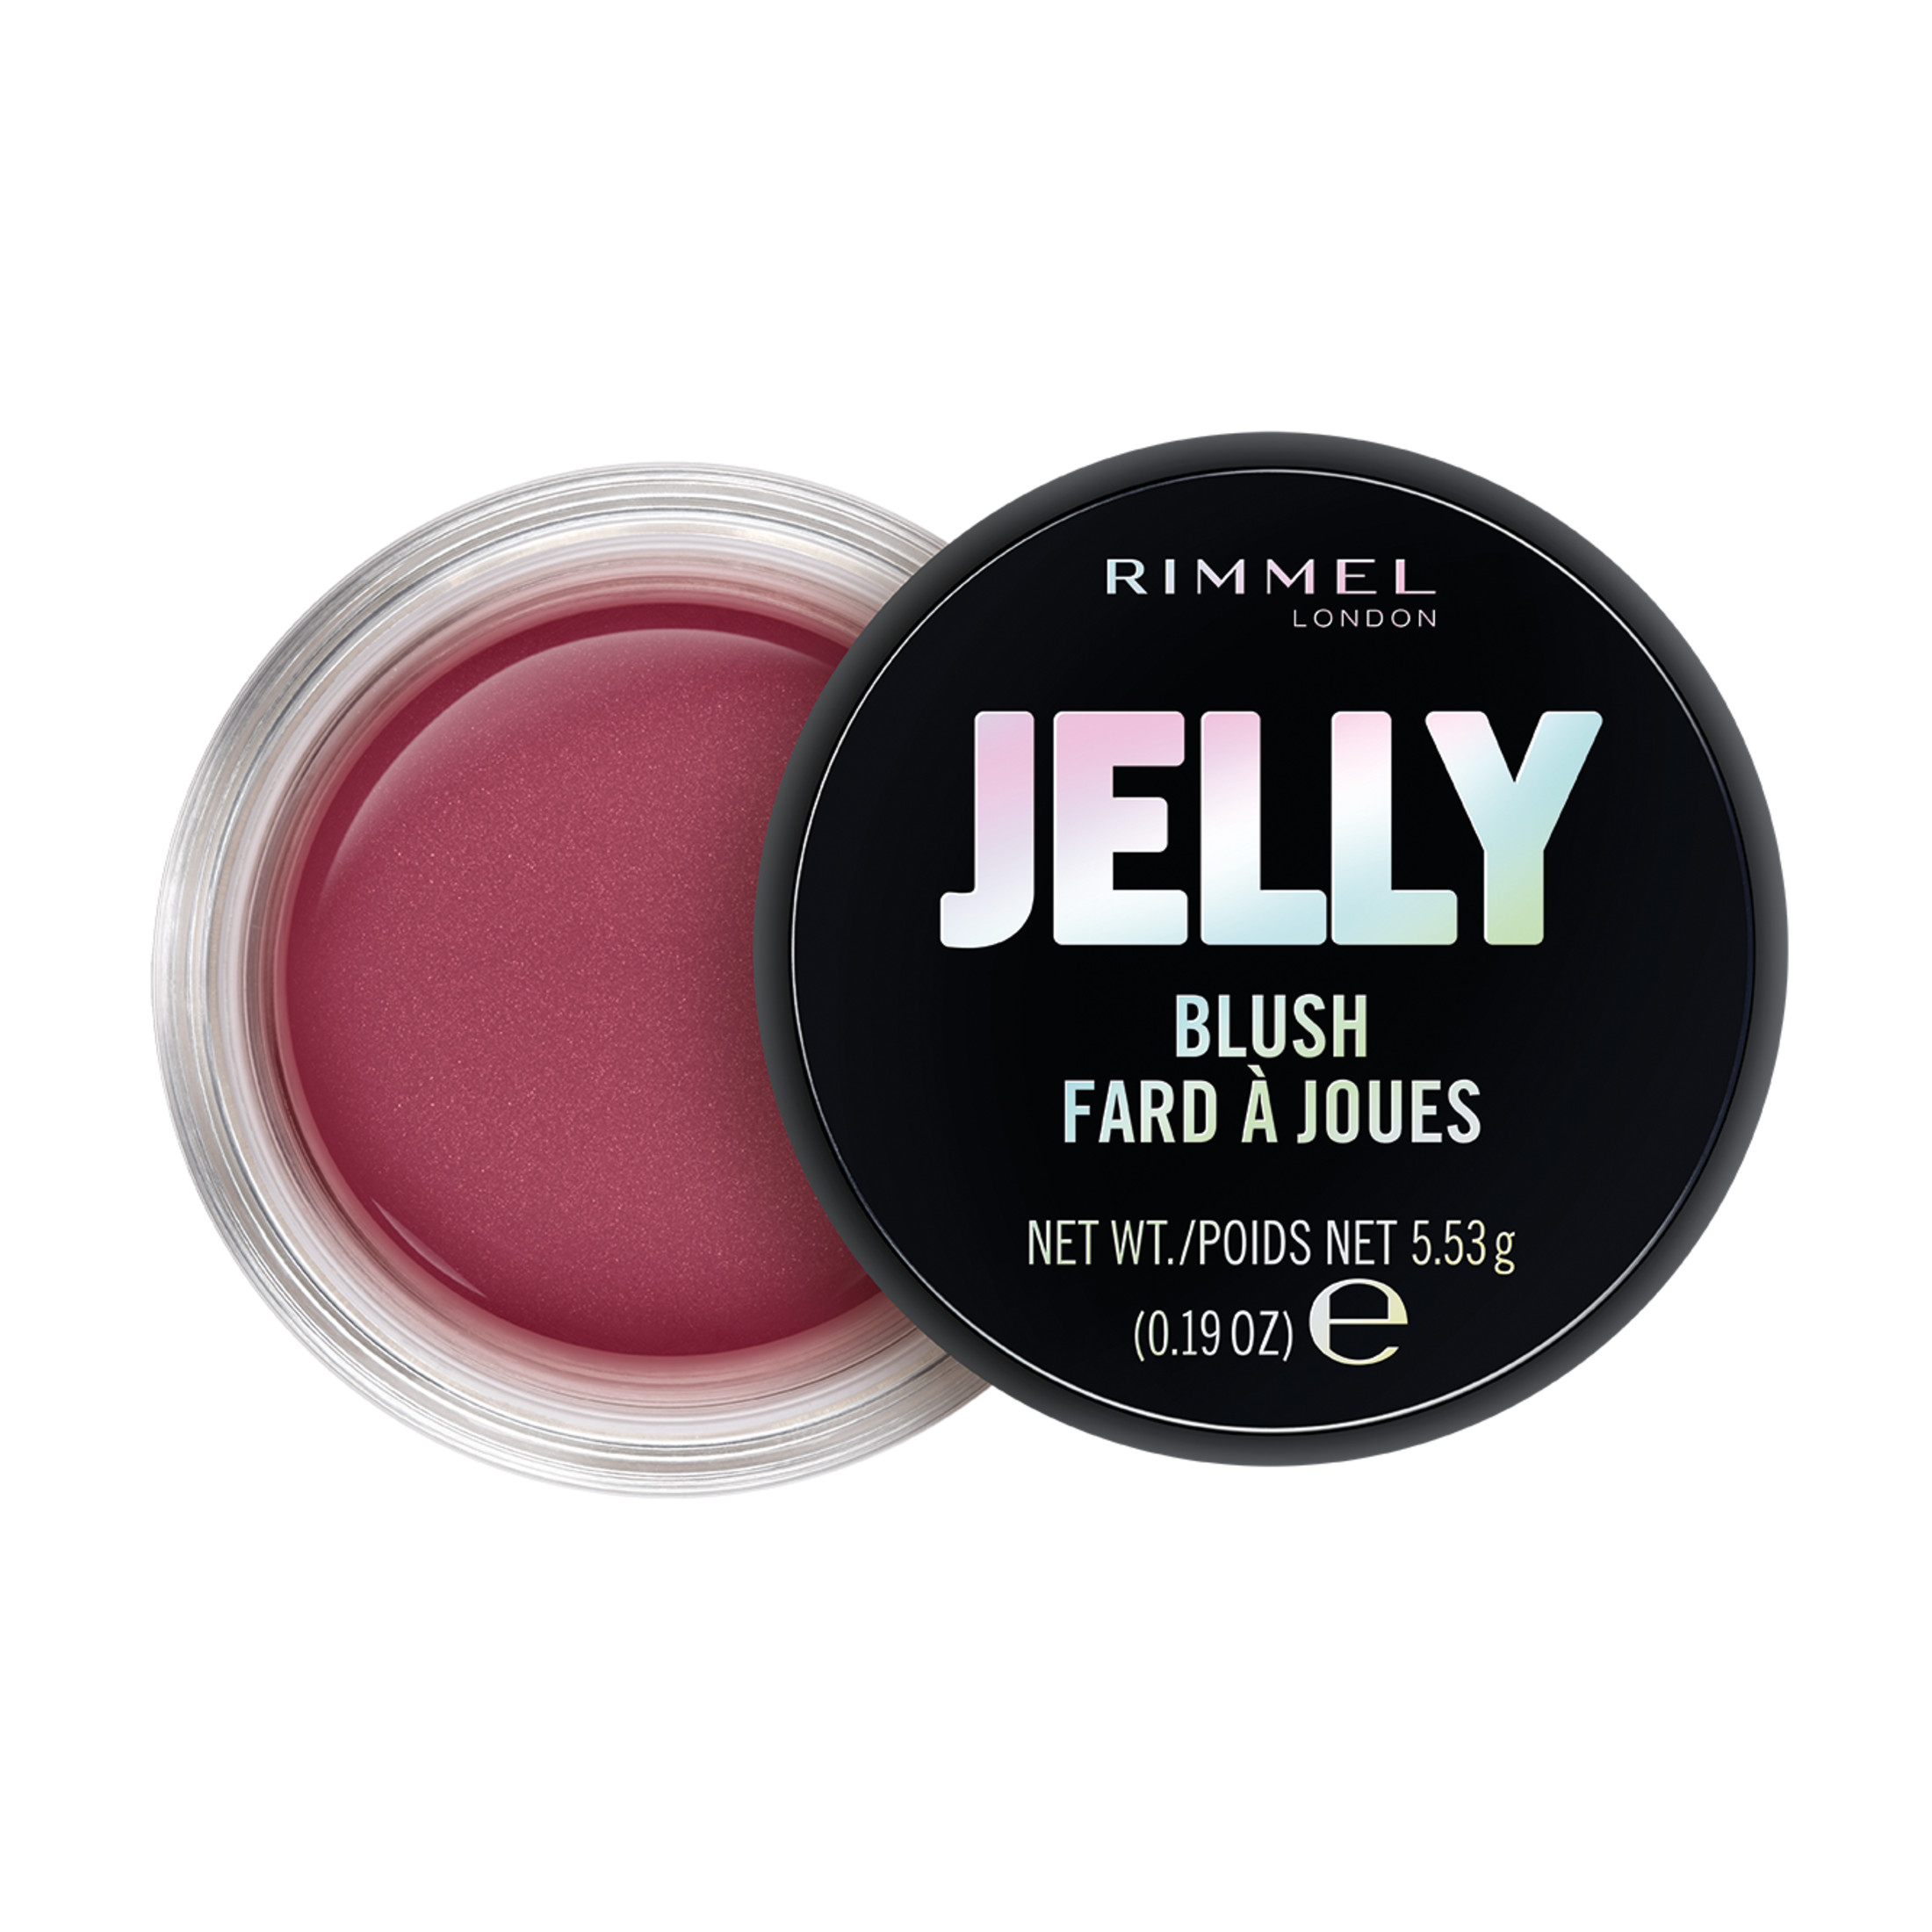 Rimmel London Jelly Blush, 005 Berry Bounce, 0.19 oz - image 1 of 8